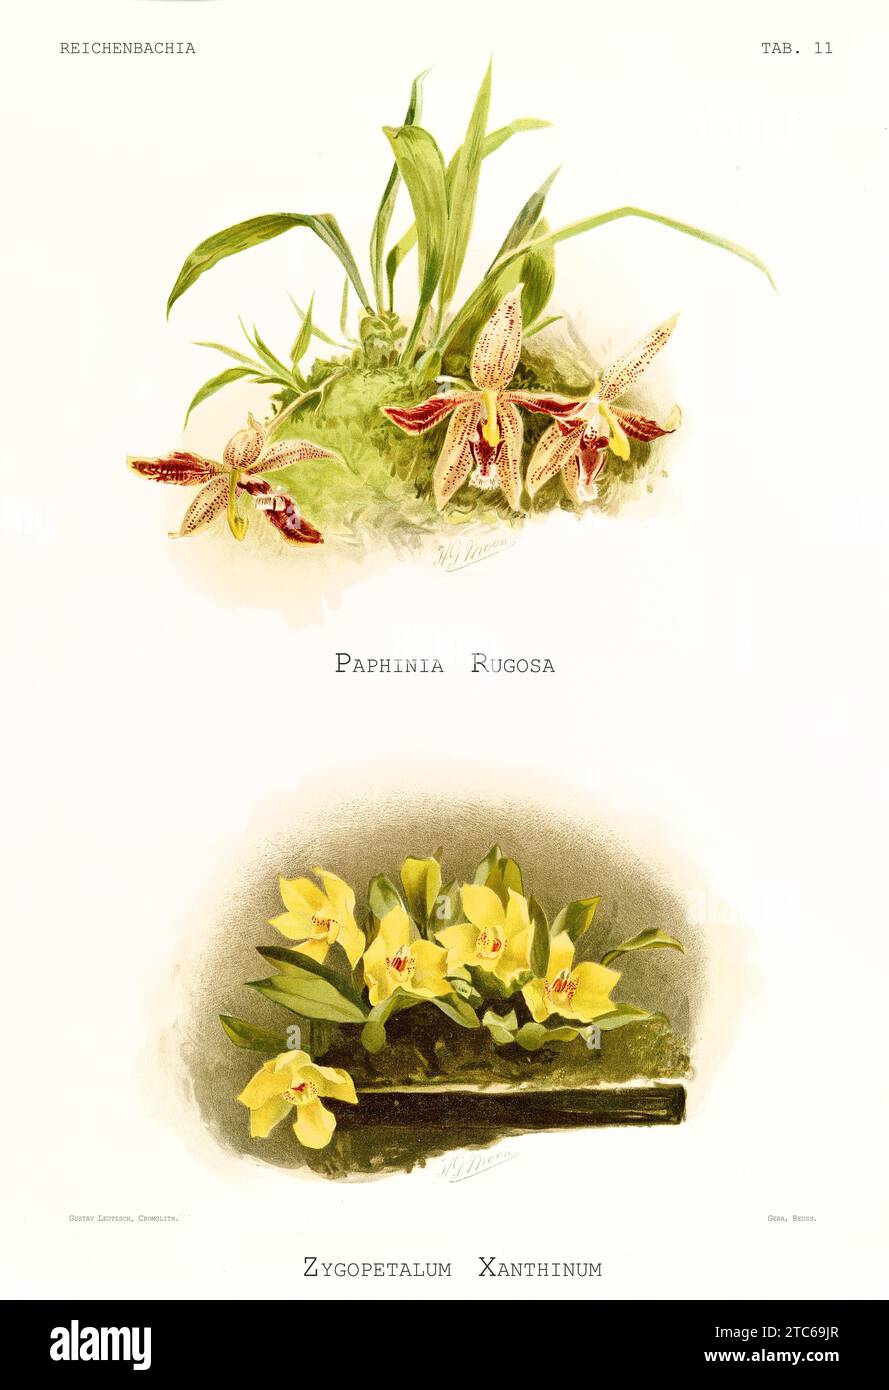 Wrinkly Paphinia (Papinia rugosa) and Yellow Promenaea (Promenaea xanthina). Reichenbachia, by F. Sander. St. Albans, UK, 1888 - 1894 Stock Photo